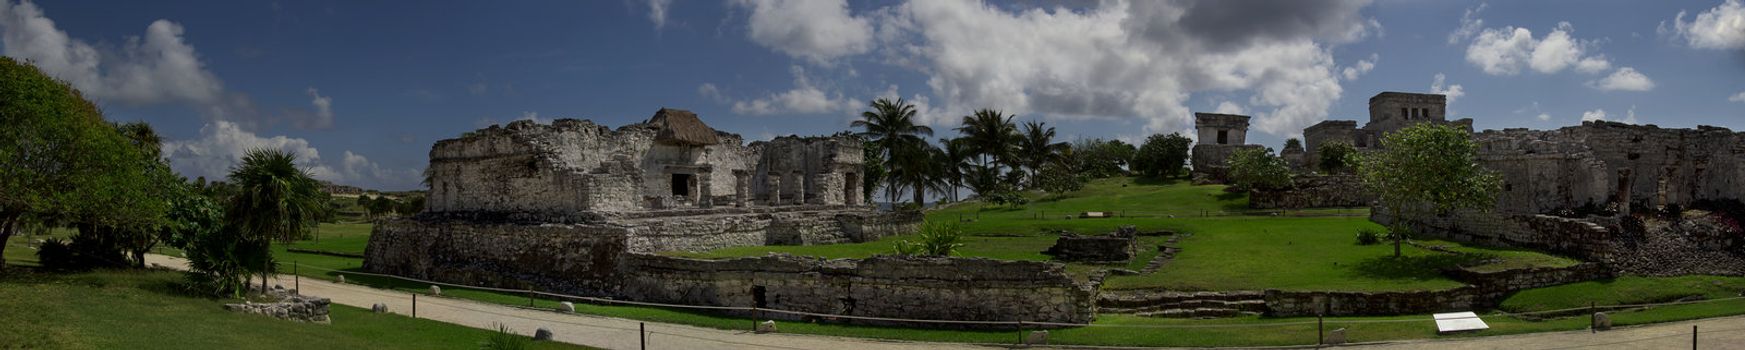 Panoramic view of the mayan ruin of Tulum